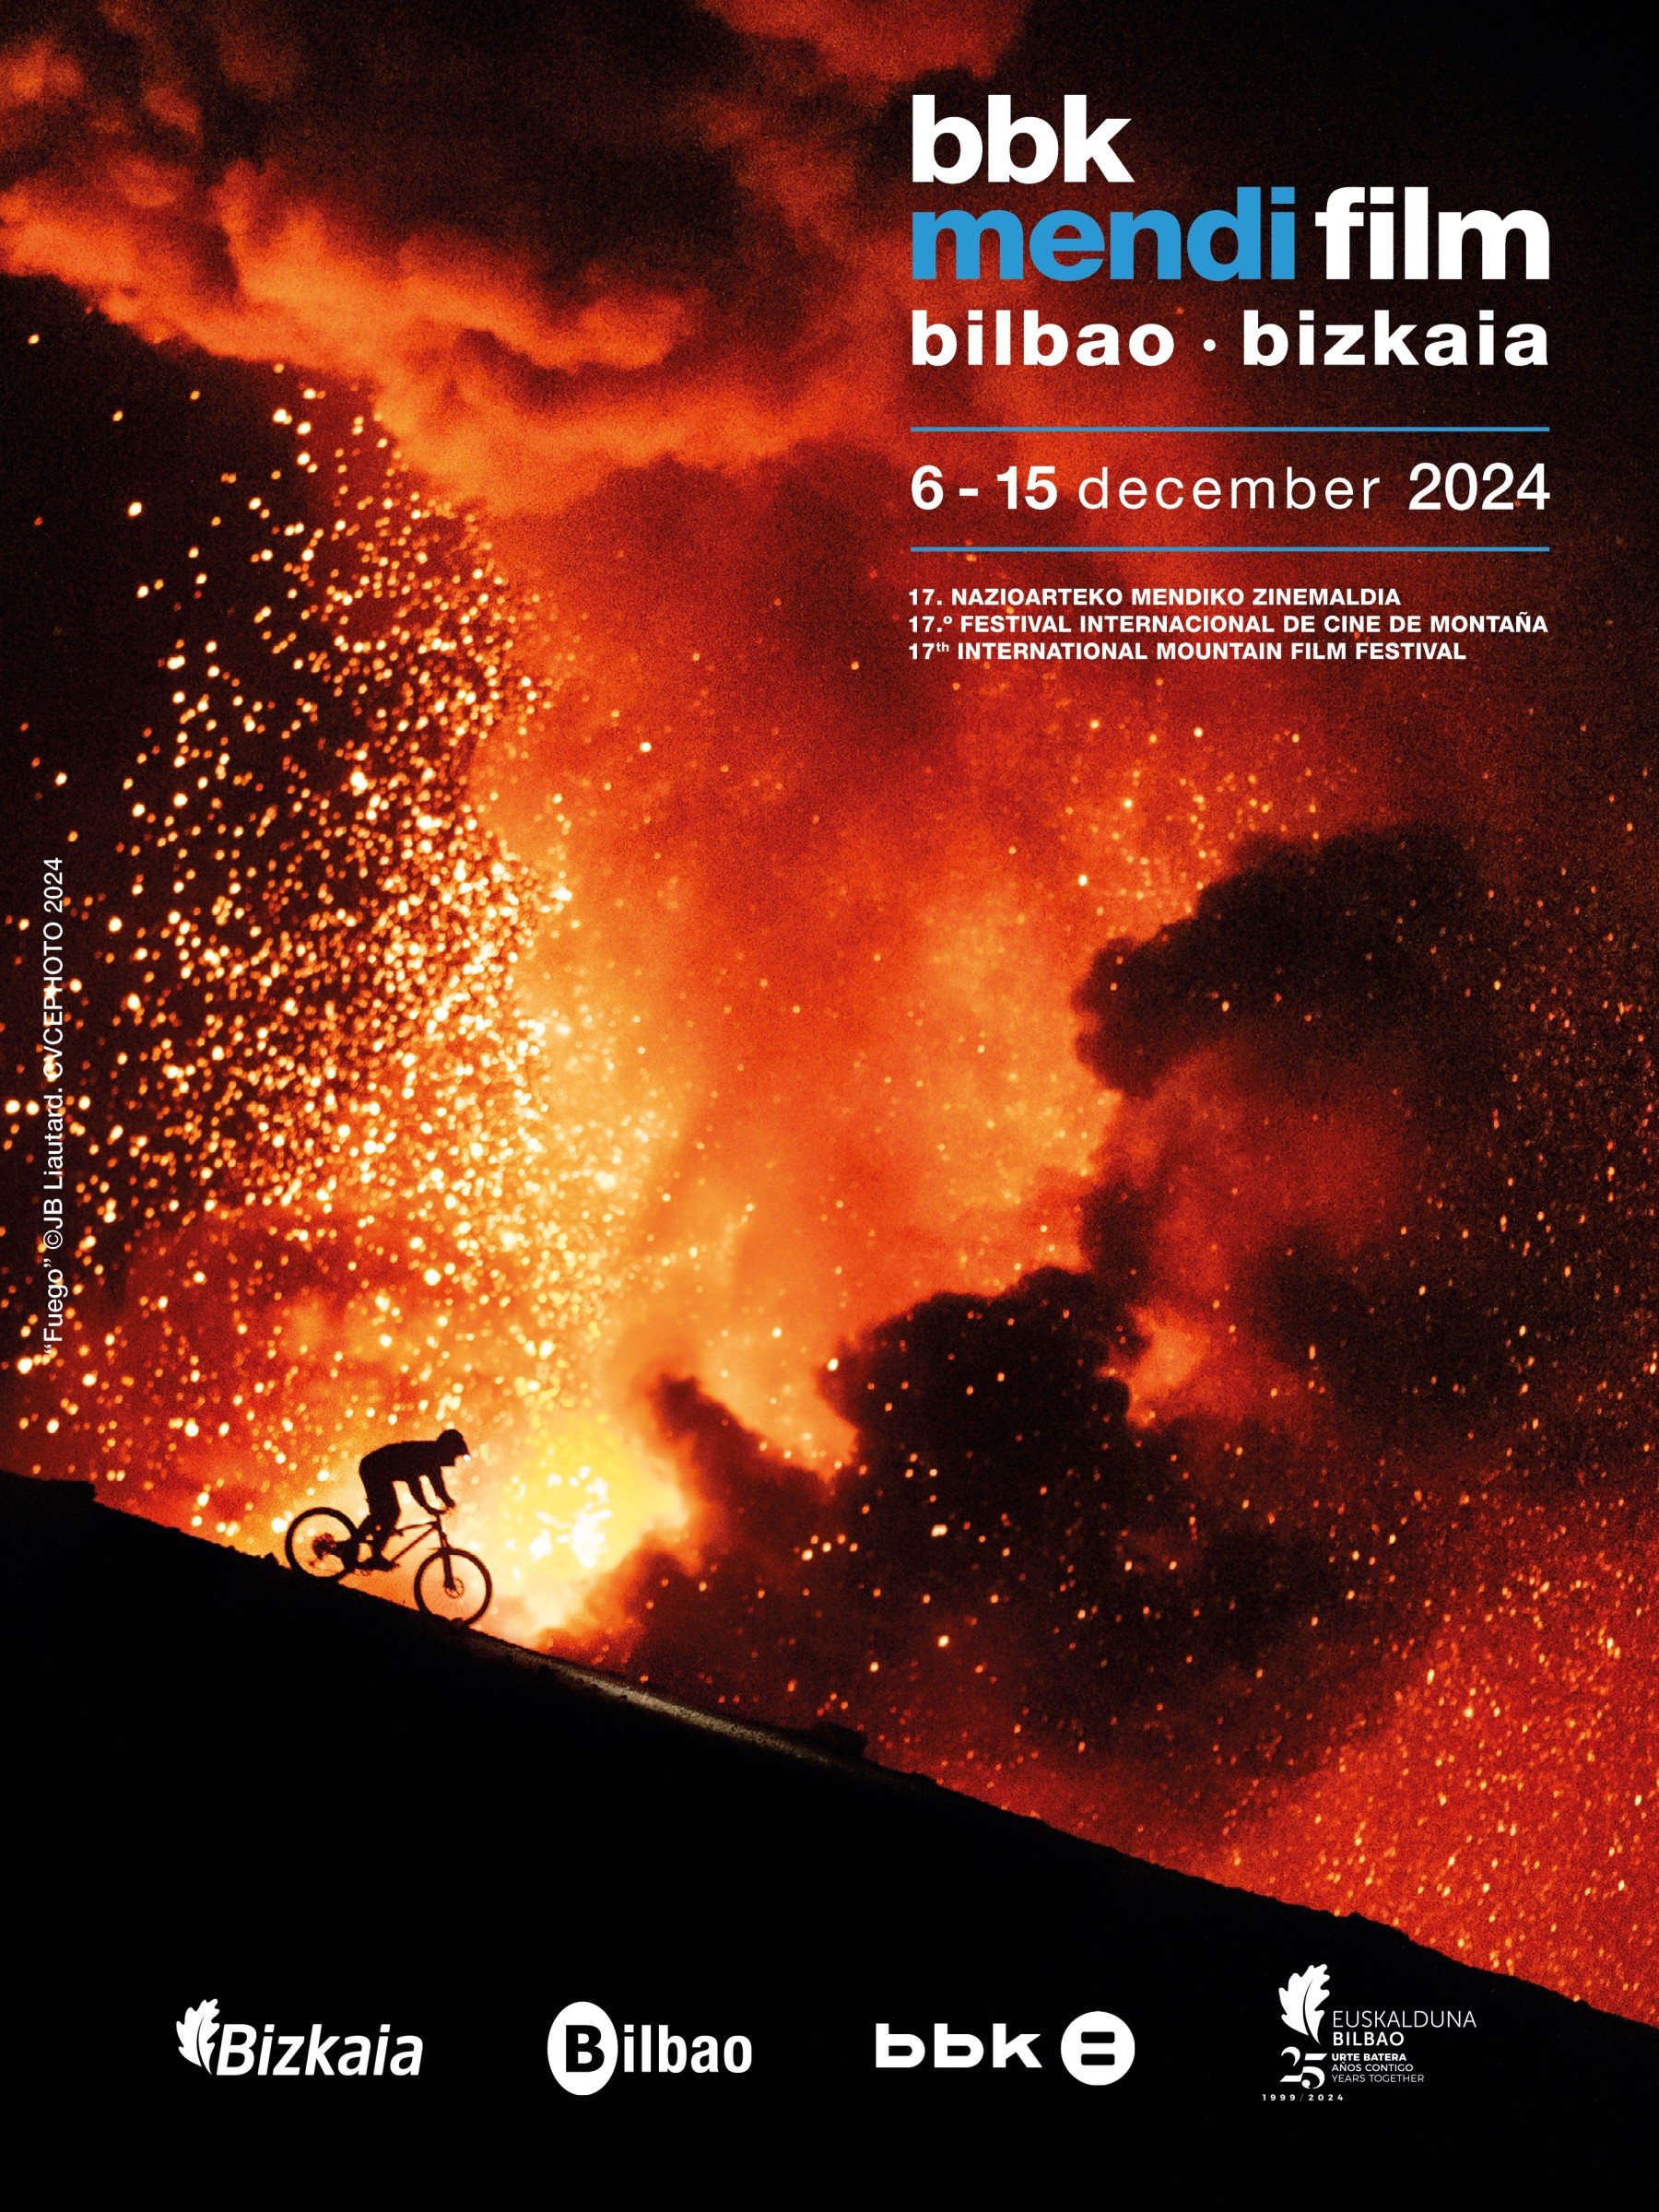 The main image of BBK Mendi Film Bilbao Bizkaia 2024 burns with “Fuego”